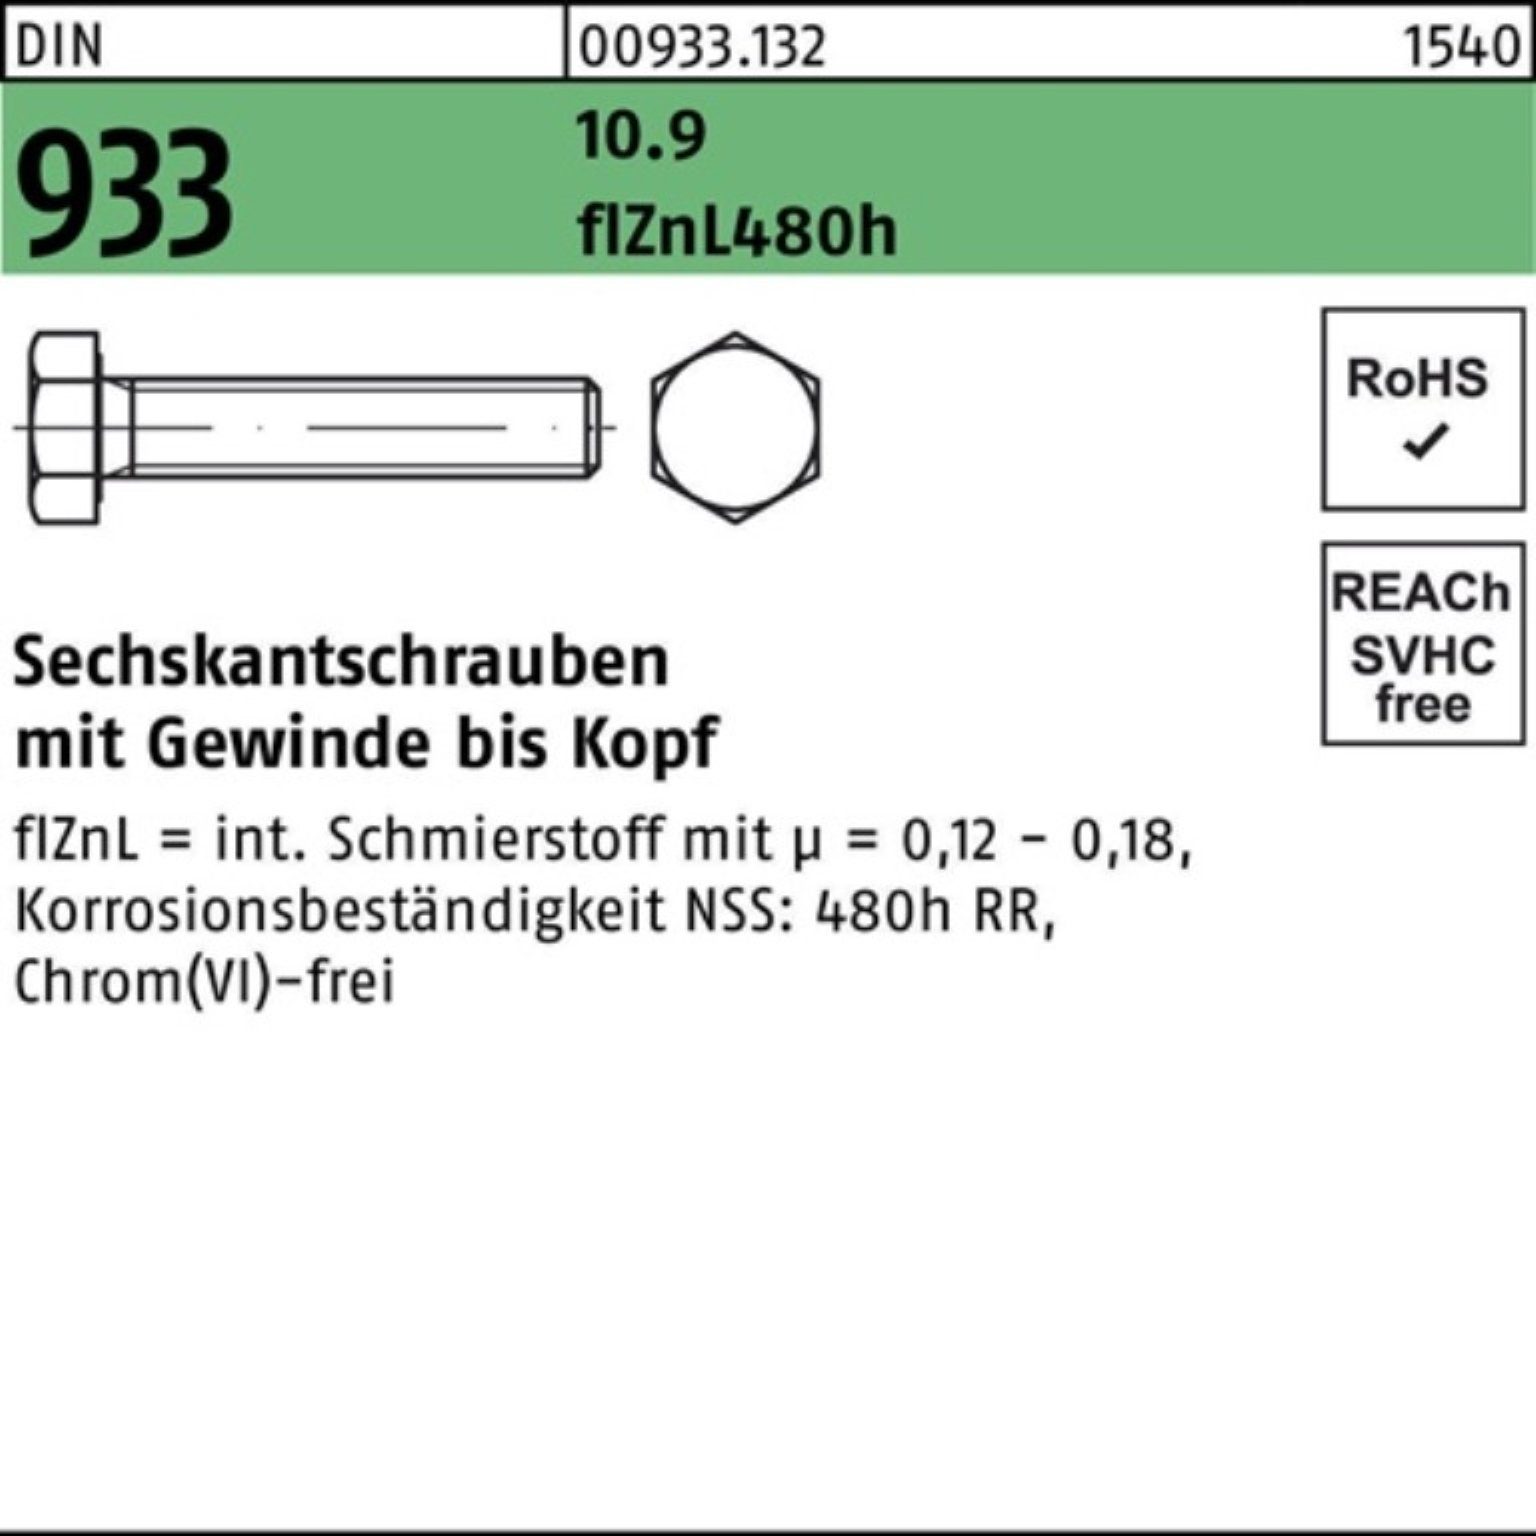 25 Sechskantschraube 500er 933 M6x VG Reyher 10.9 flZnL/nc/x/x/480h Sechskantschraube DIN Pack